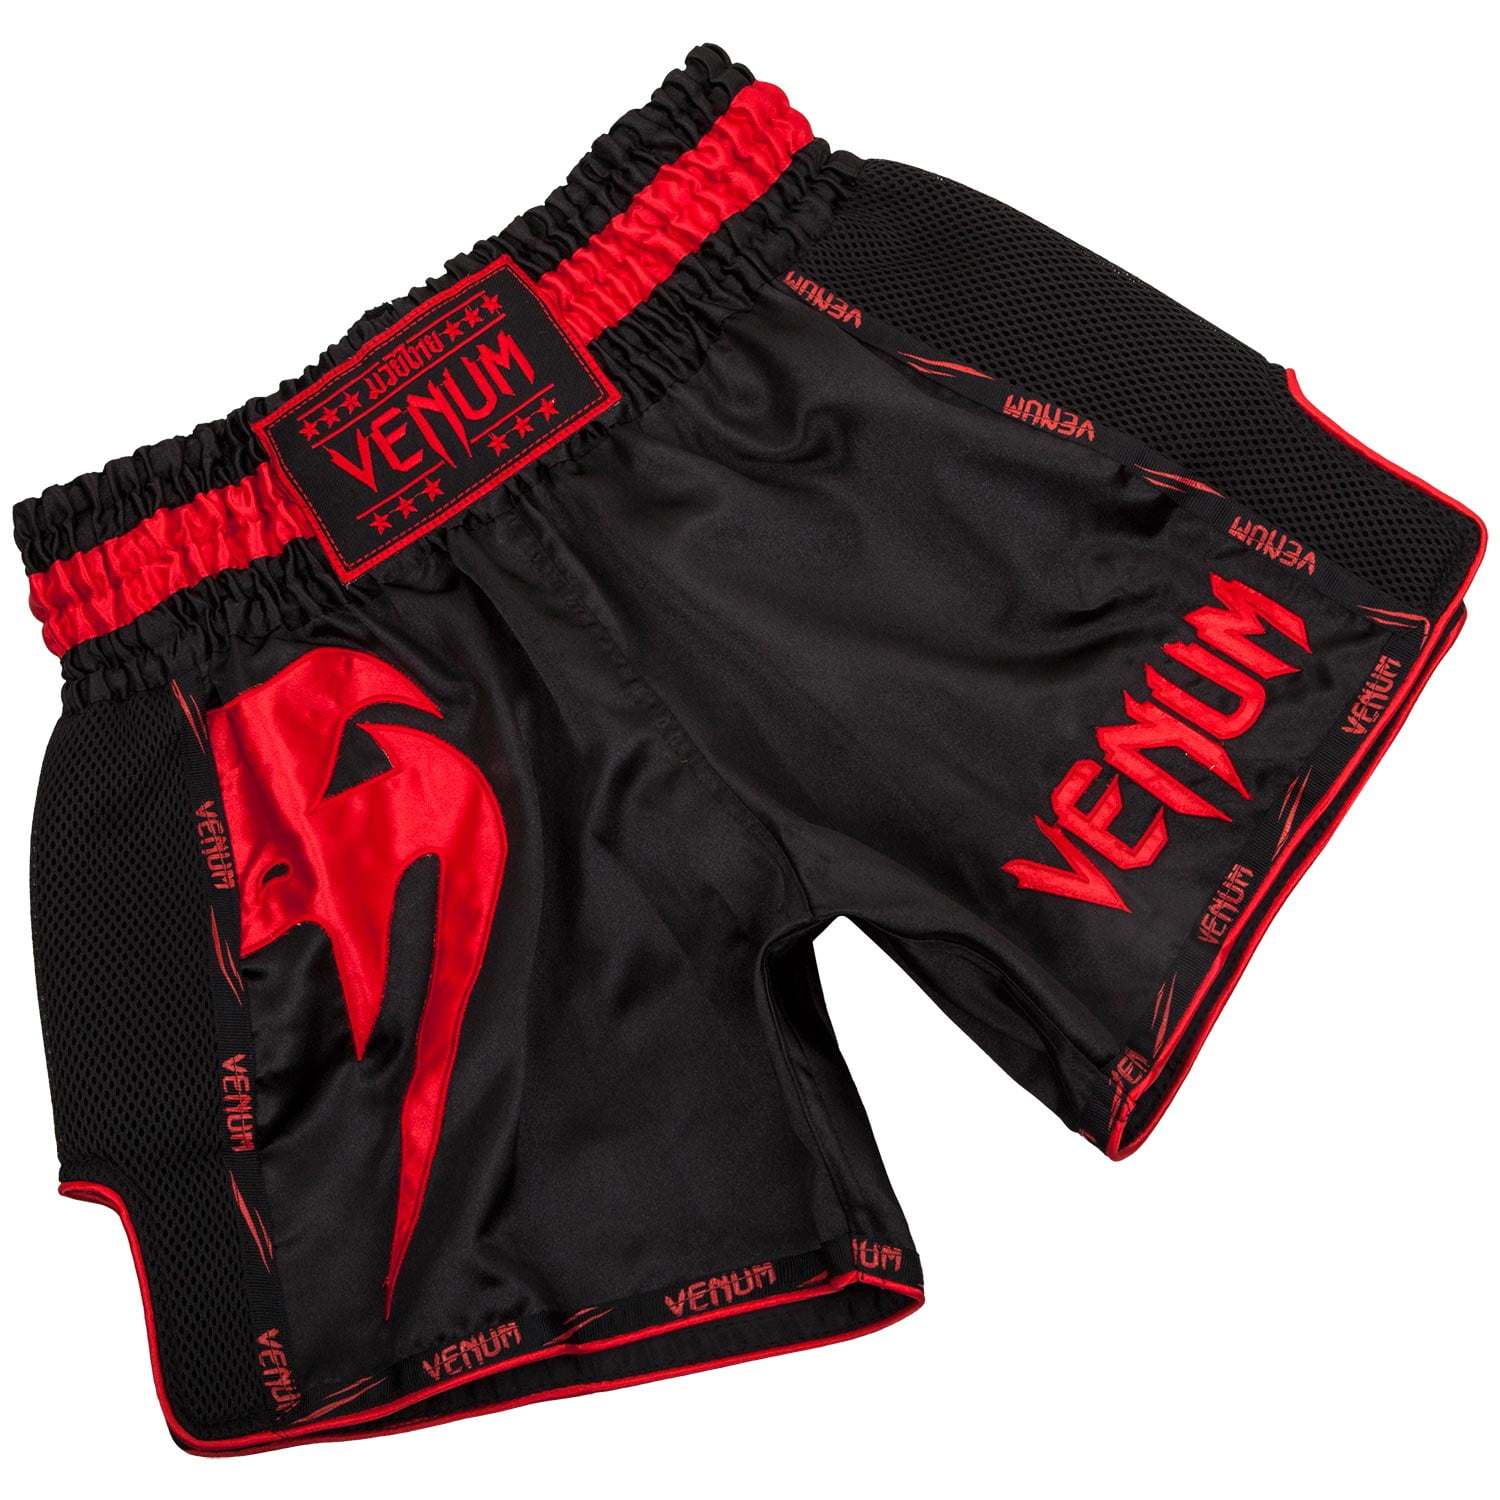 Venum Giant Muay Thai Shorts - Walmart.com